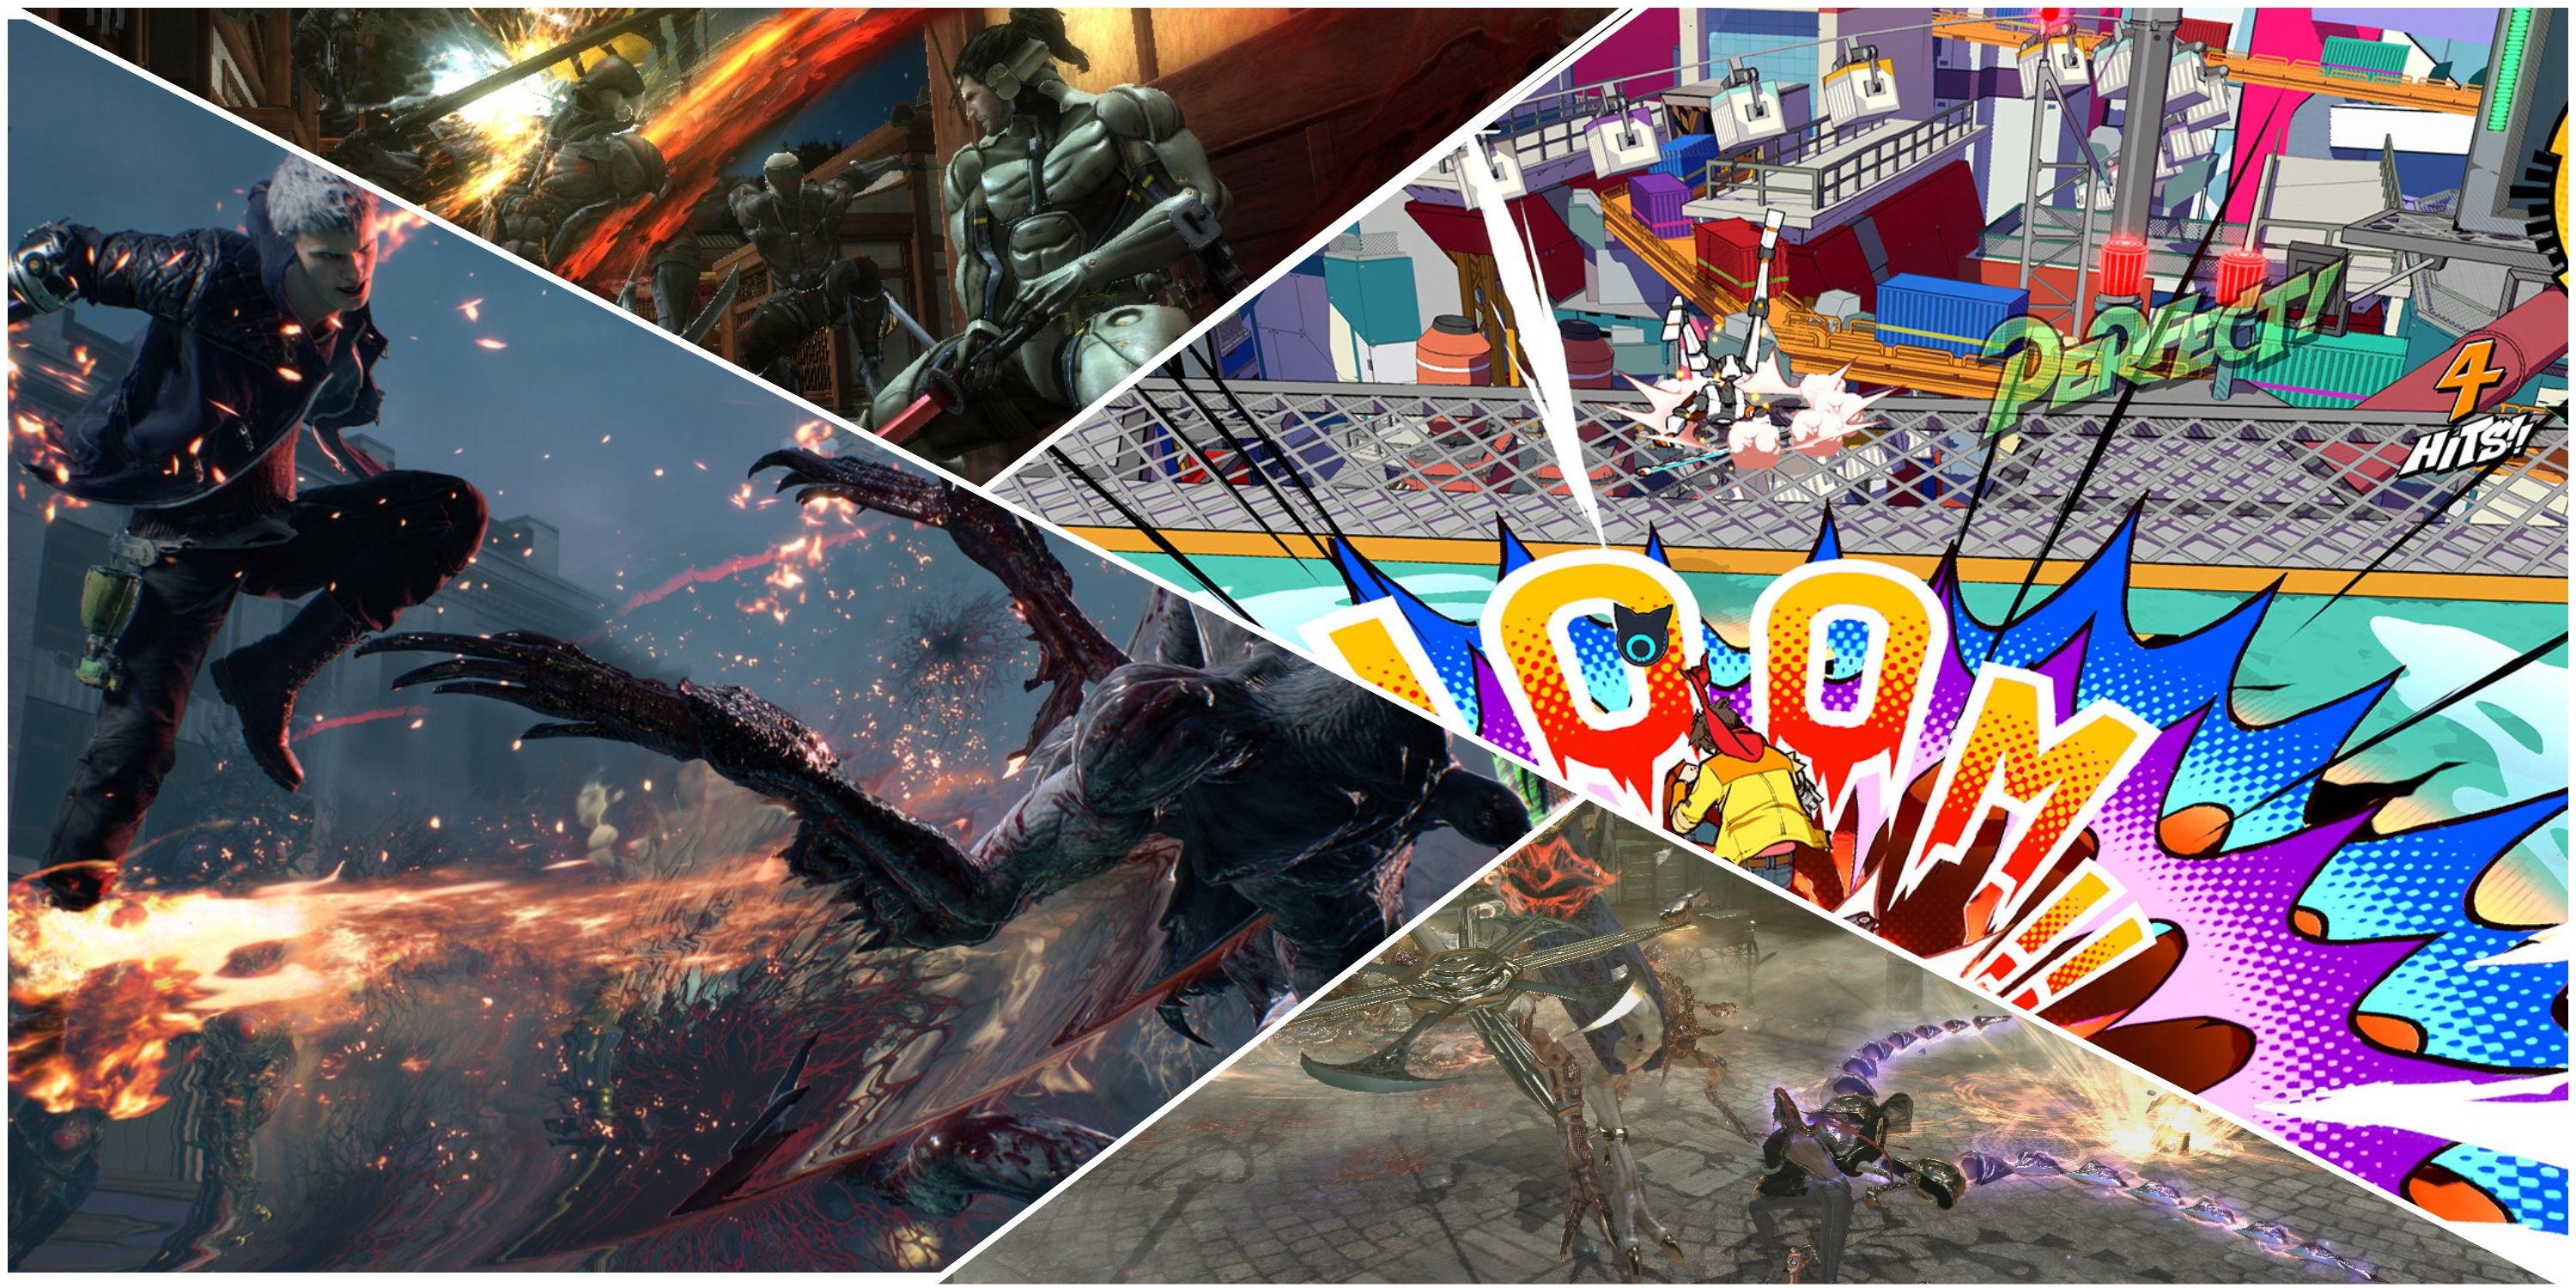 Best Spectacle Fighters (featured image) - DMC5 + Metal Gear Rising: Revengeance + Hi-Fi RUSH + Bayonetta